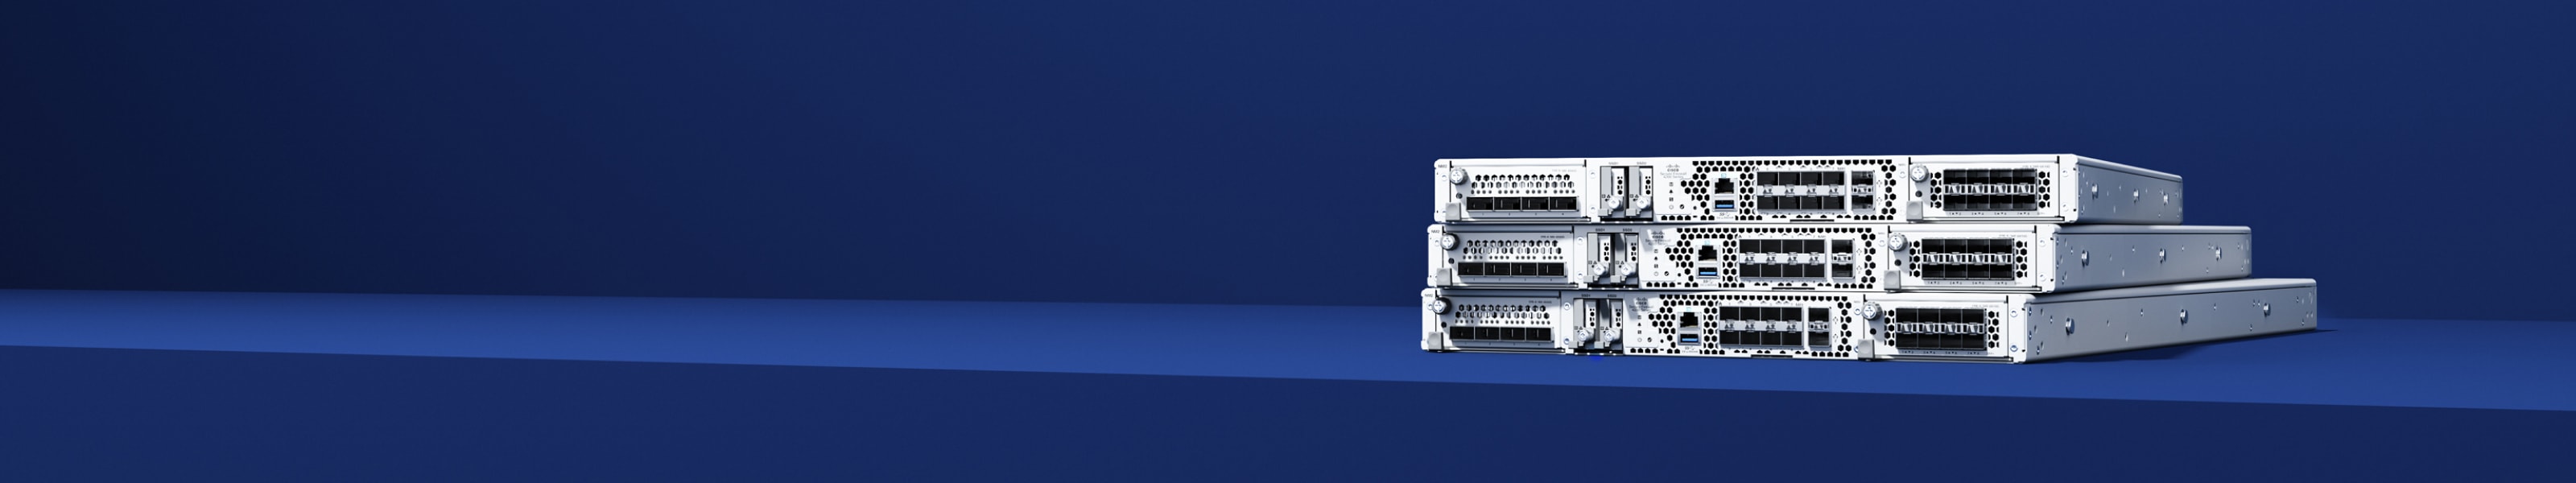 Cisco Secure Firewall 4200-Serie